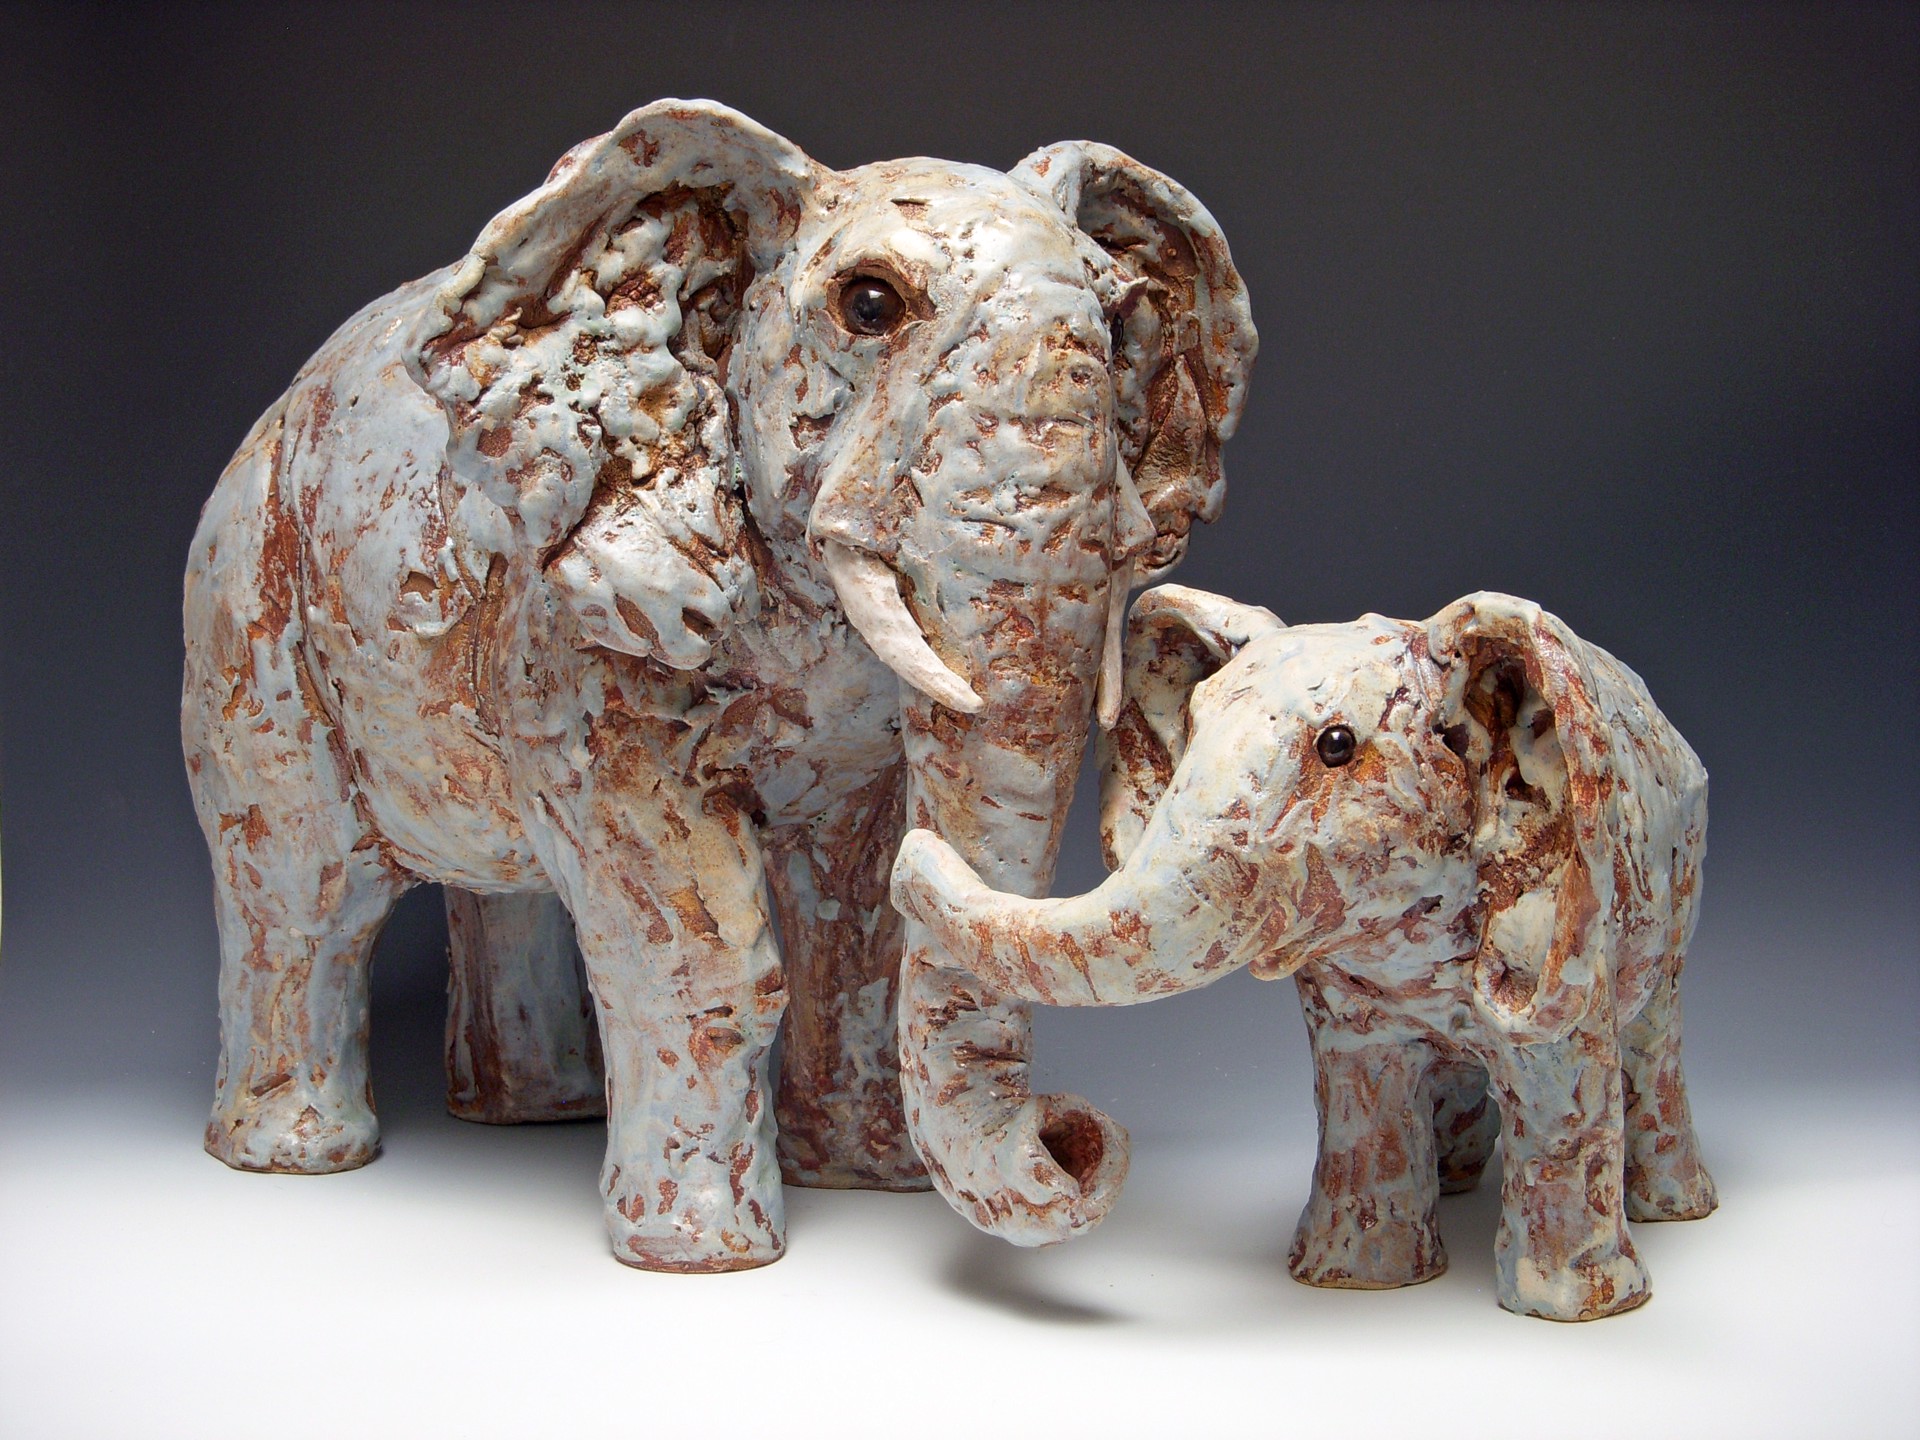 Serengeti (mother and baby elephant set) by Kari Rives